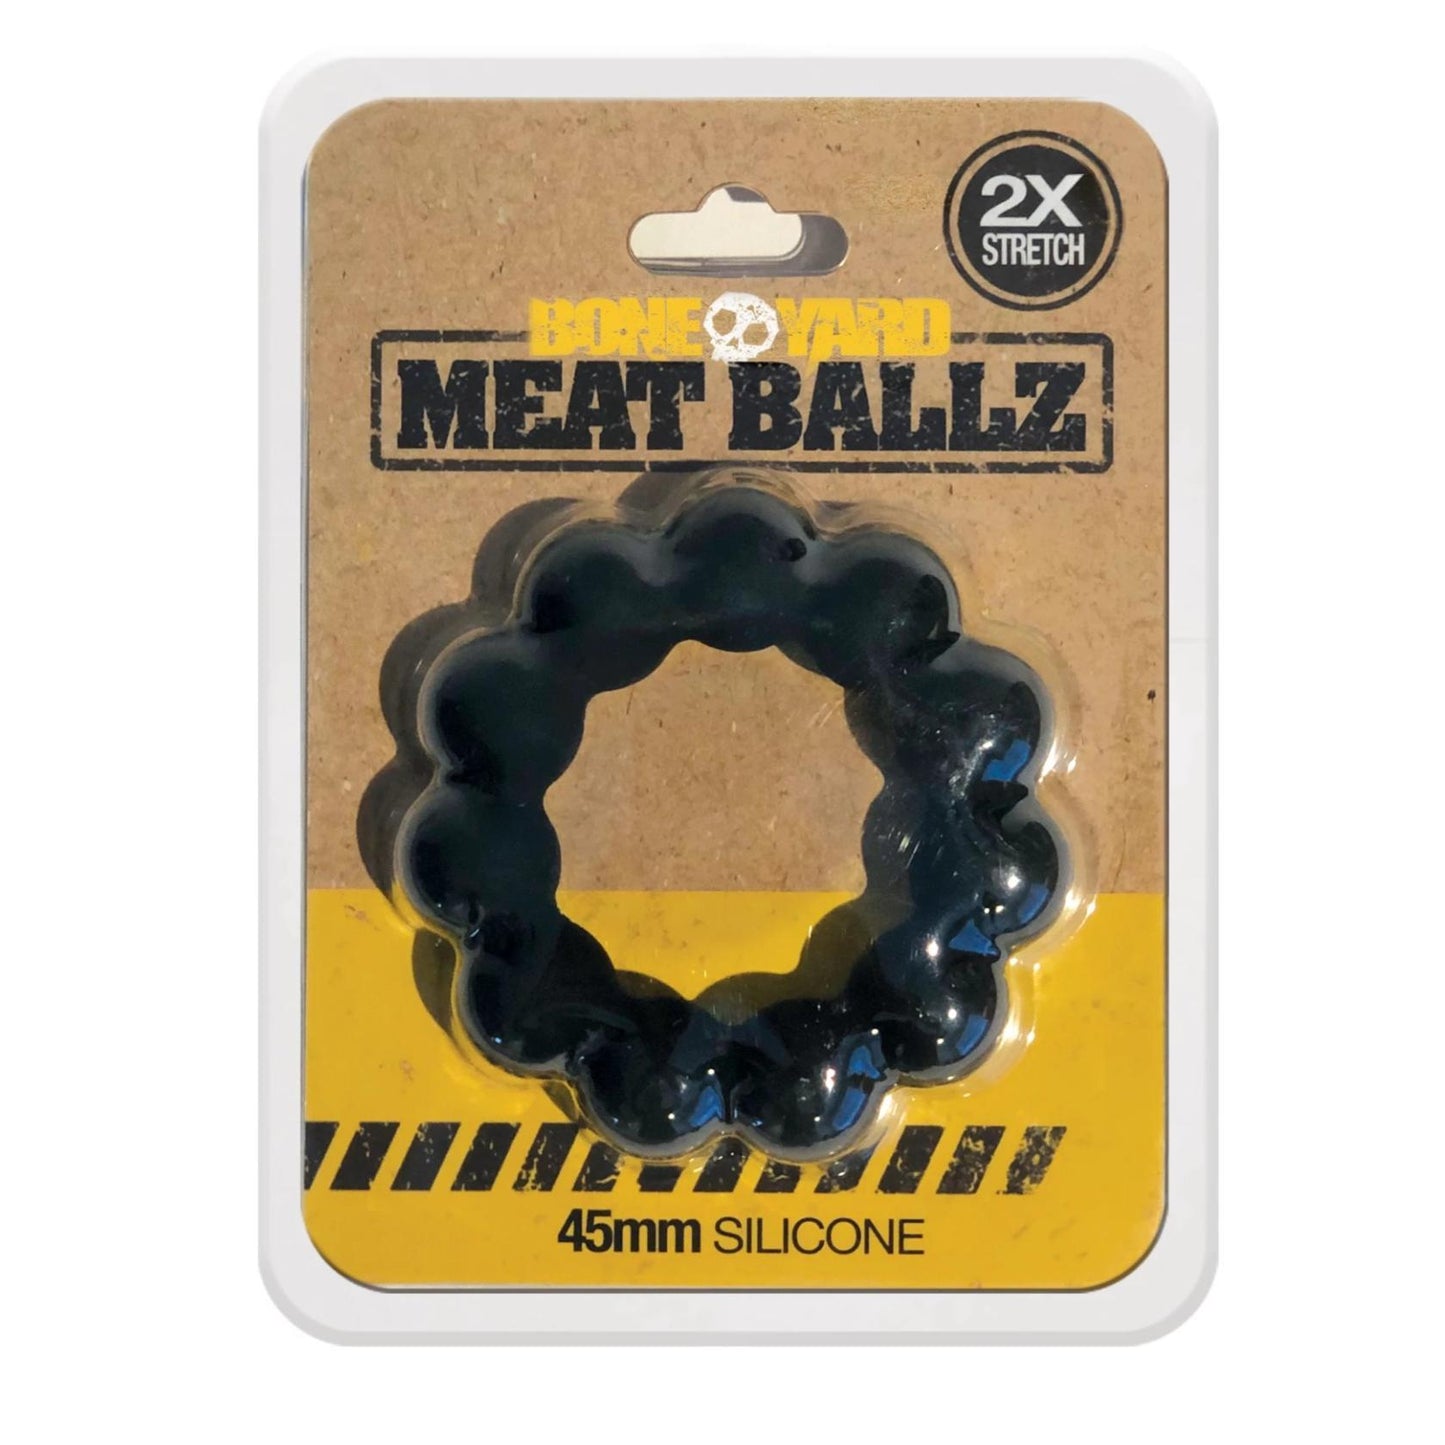 Meat Ballz - C1RB2B